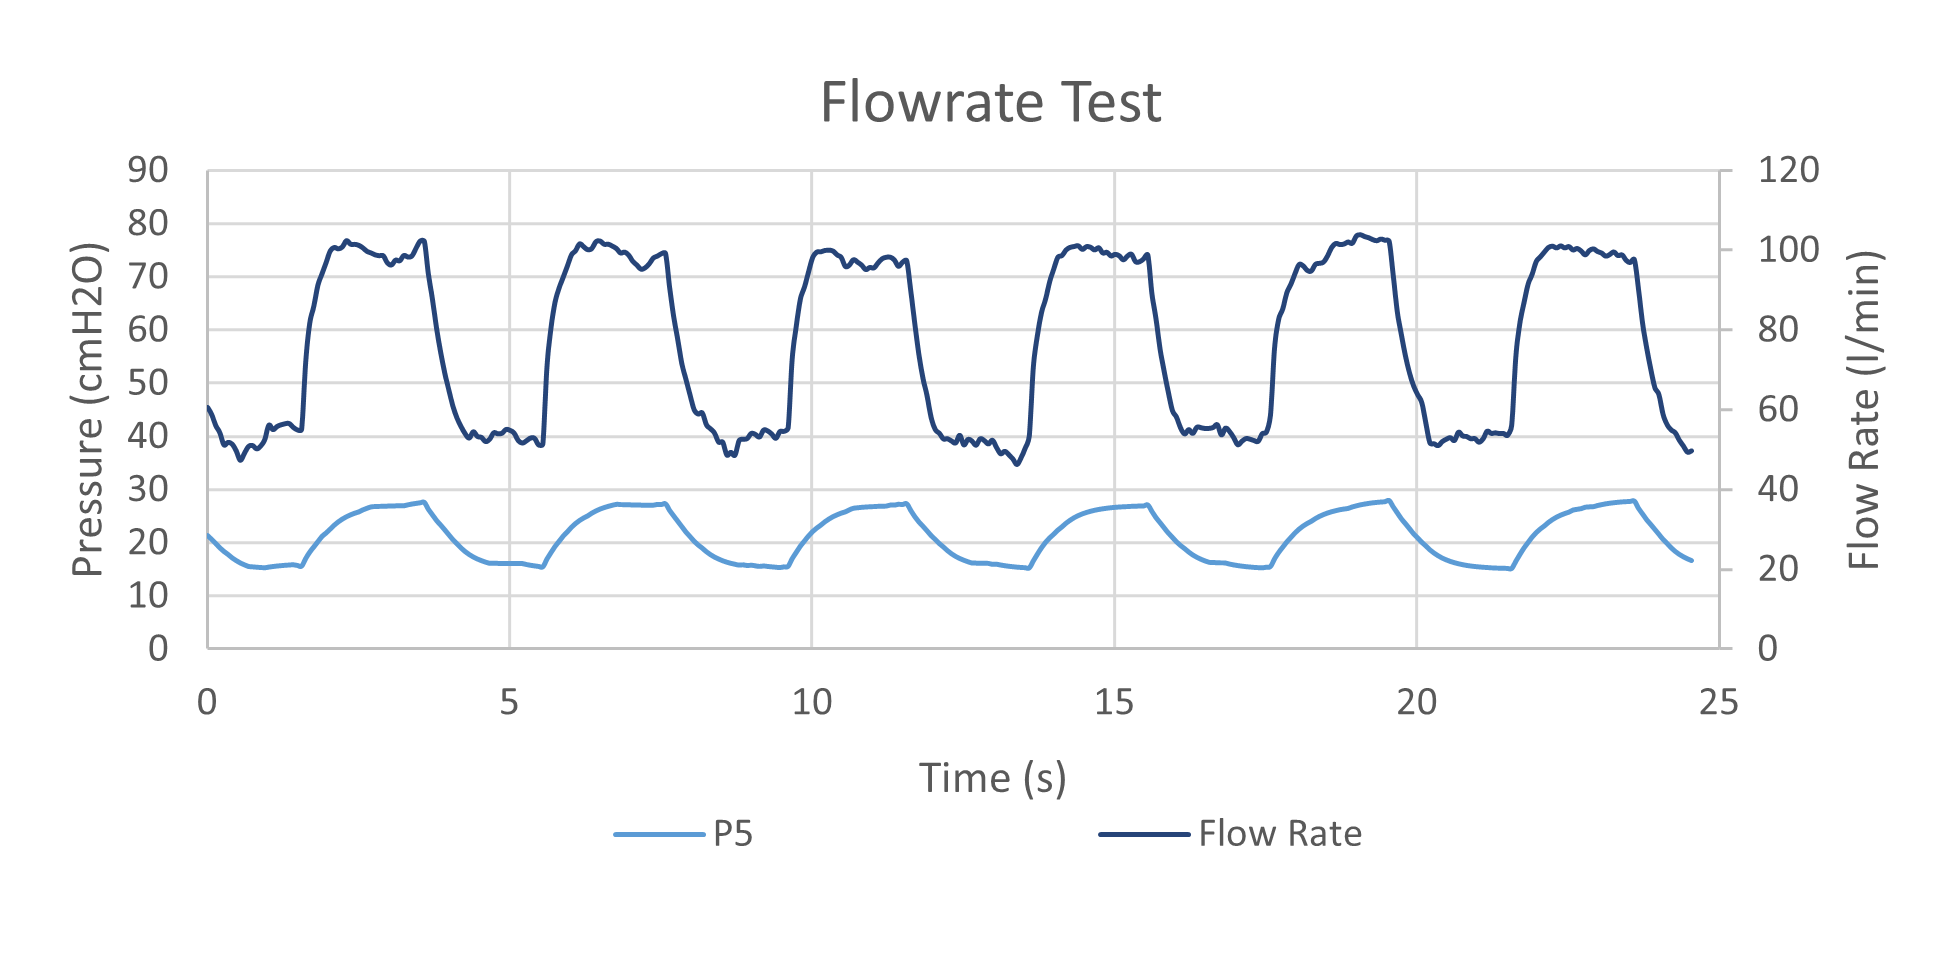 Figure 6: Flowrate Test Result